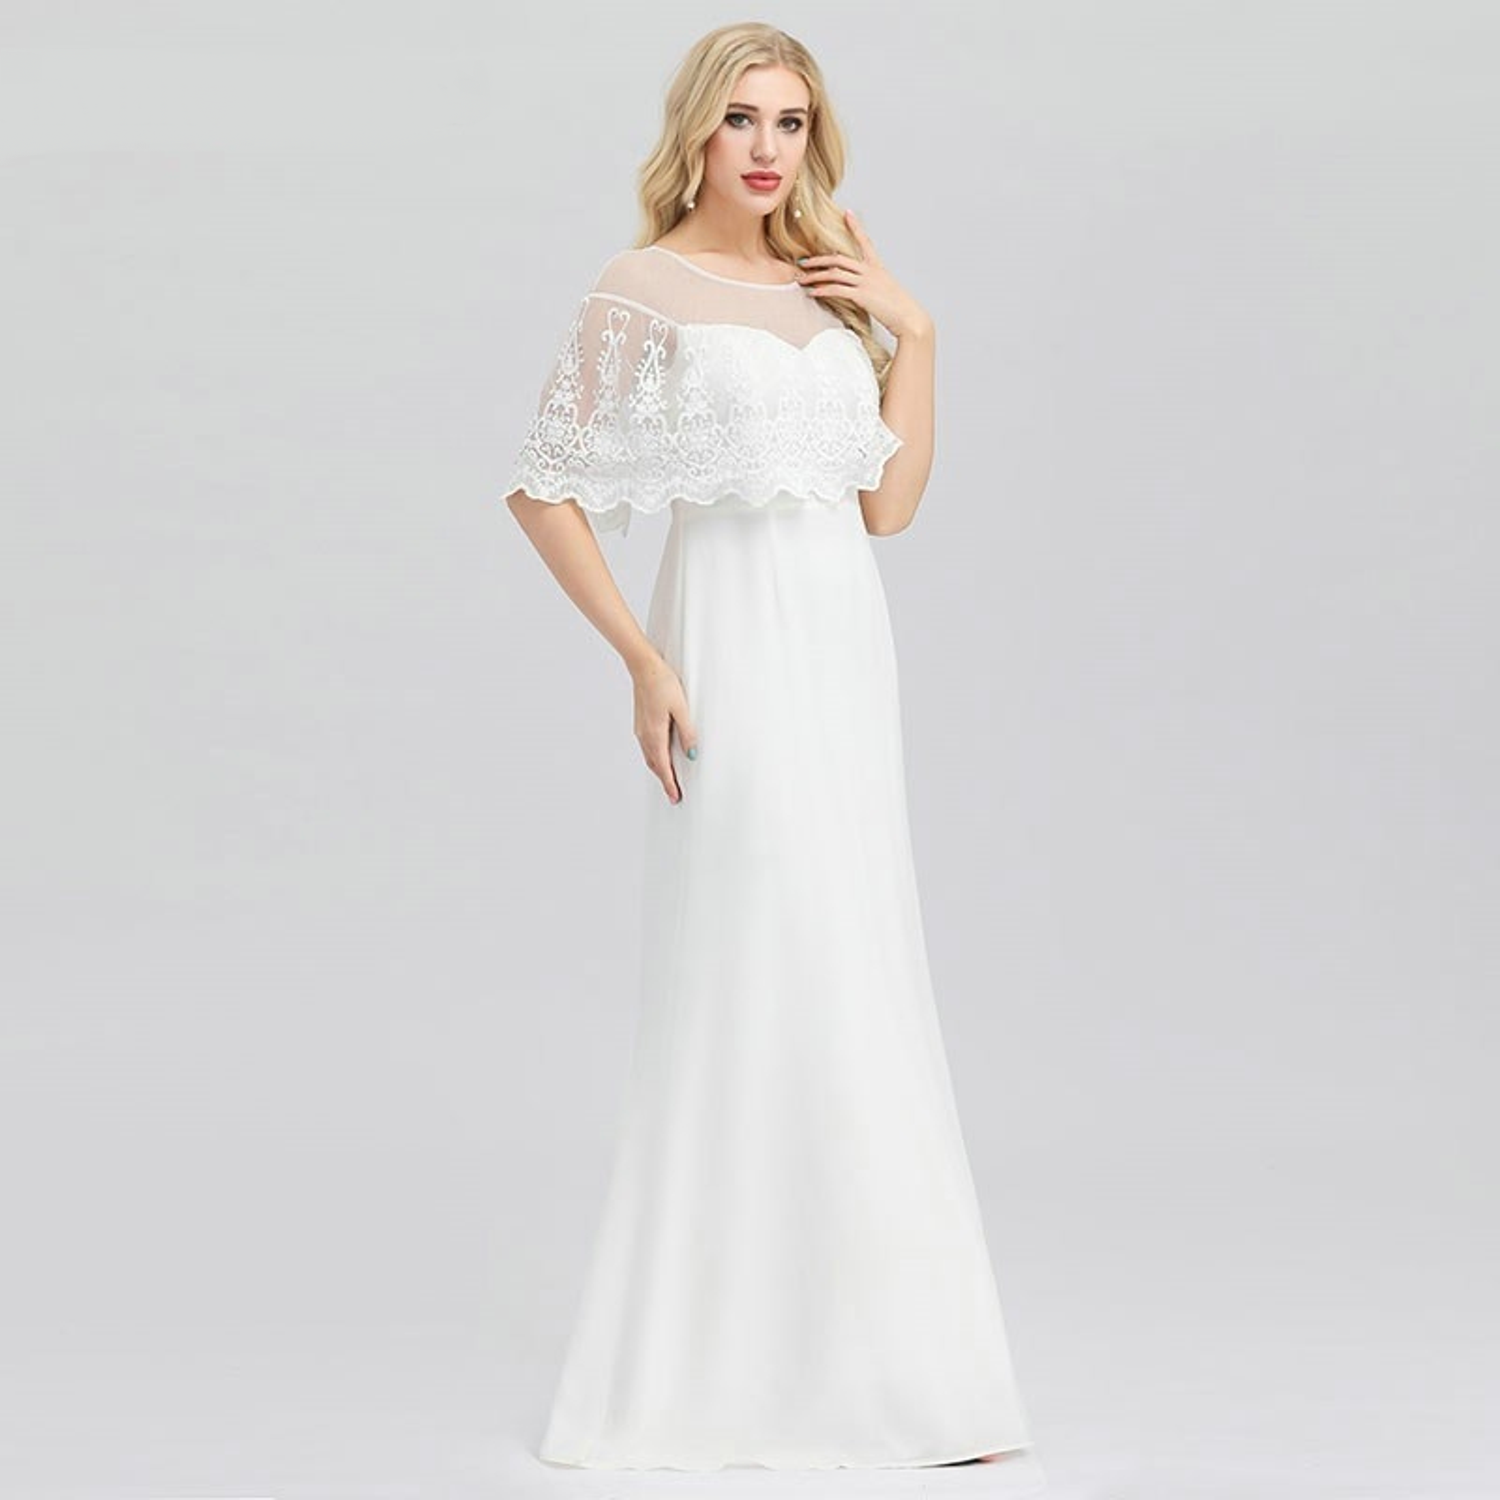 Elegant wedding dress with illusion cape